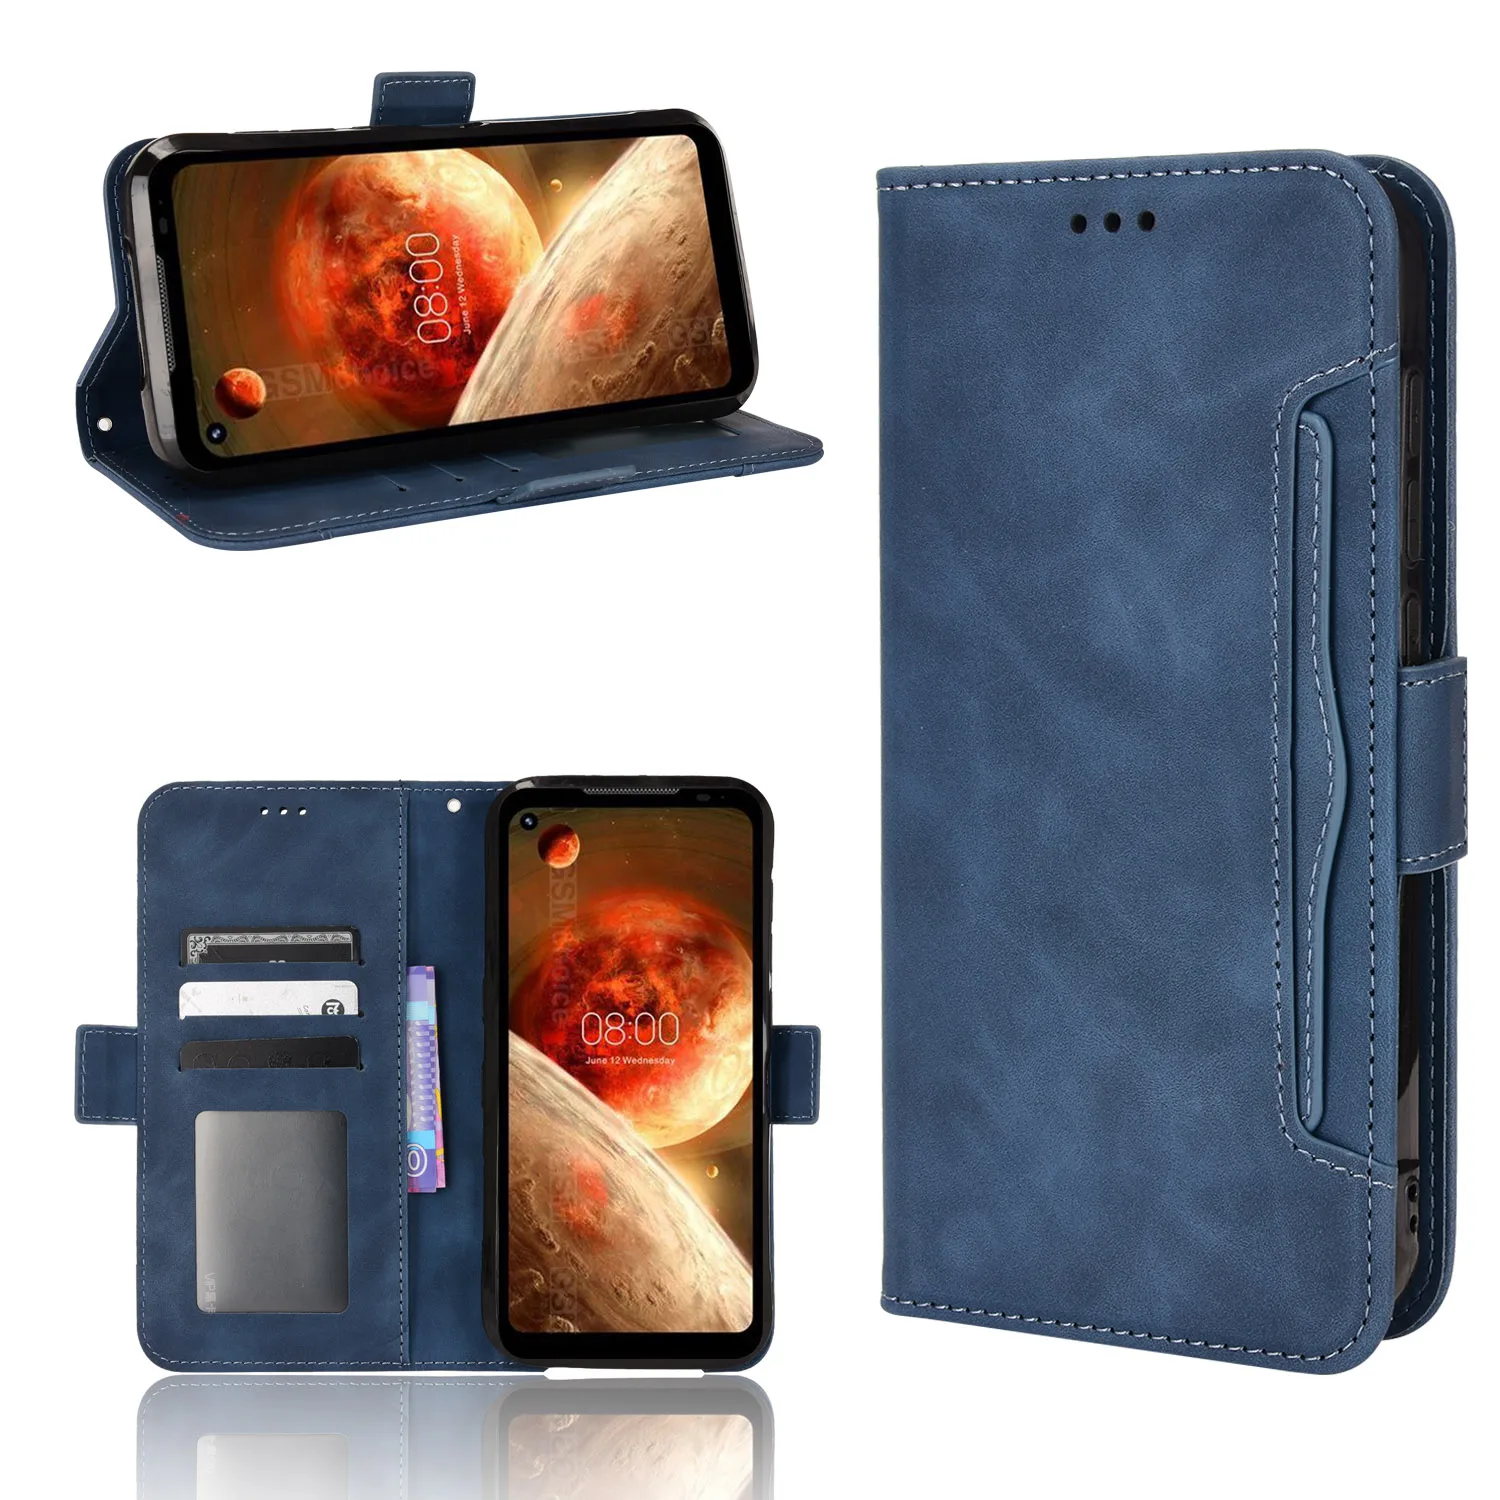 For Doogee S97 Pro Case Premium Leather Wallet Leather Flip Multi-card slot Cover For Doogee S97 Pro S 97 Pro S97Pro Phone Case